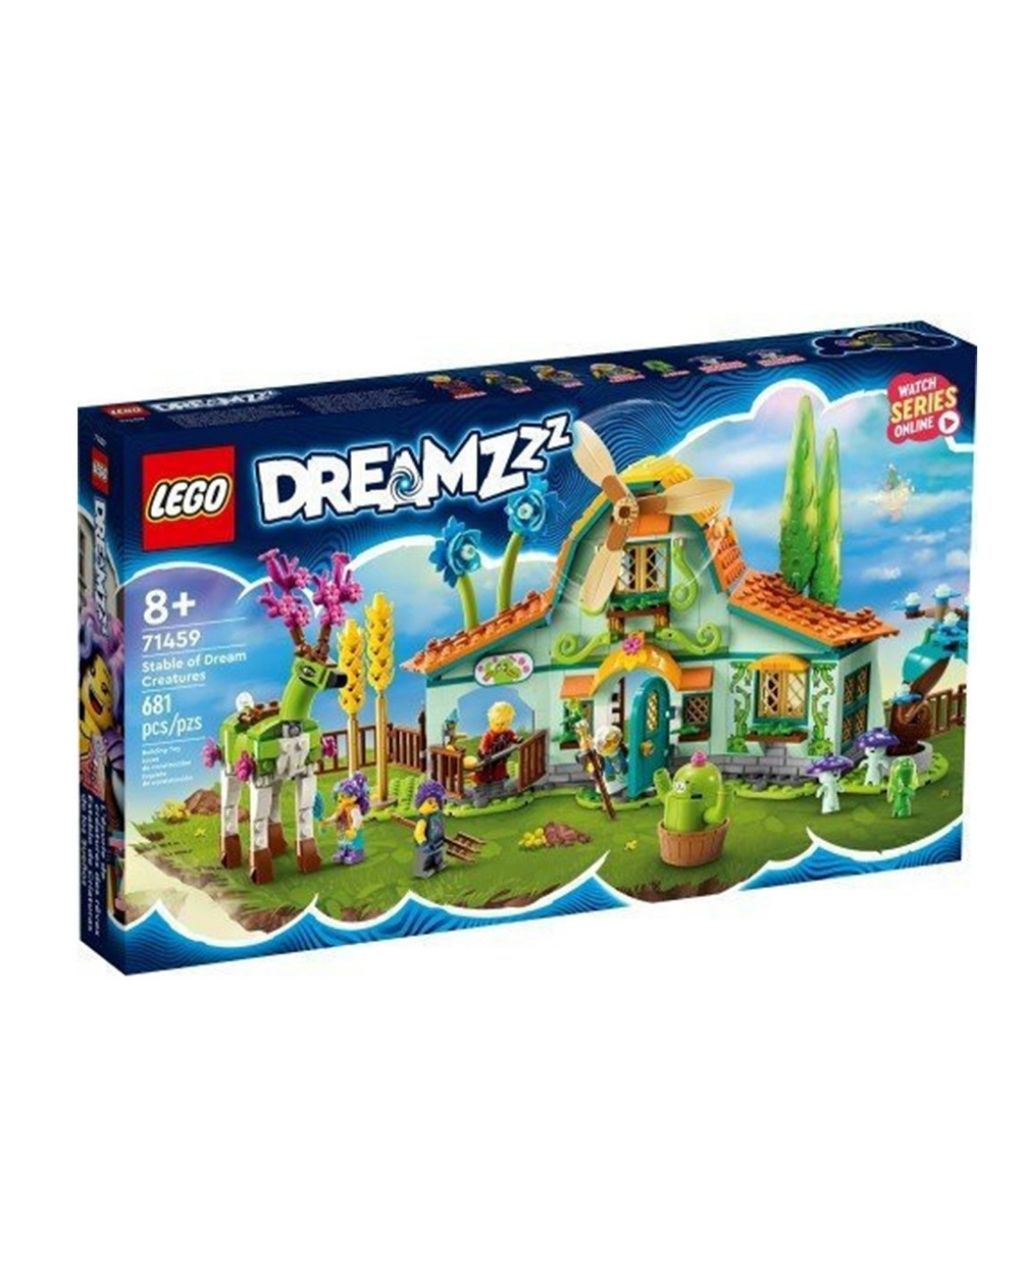 Lego dreamzzz ο στάβλος των ονειροπλασμάτων 71459 - Lego, LEGO DREAMZZZ